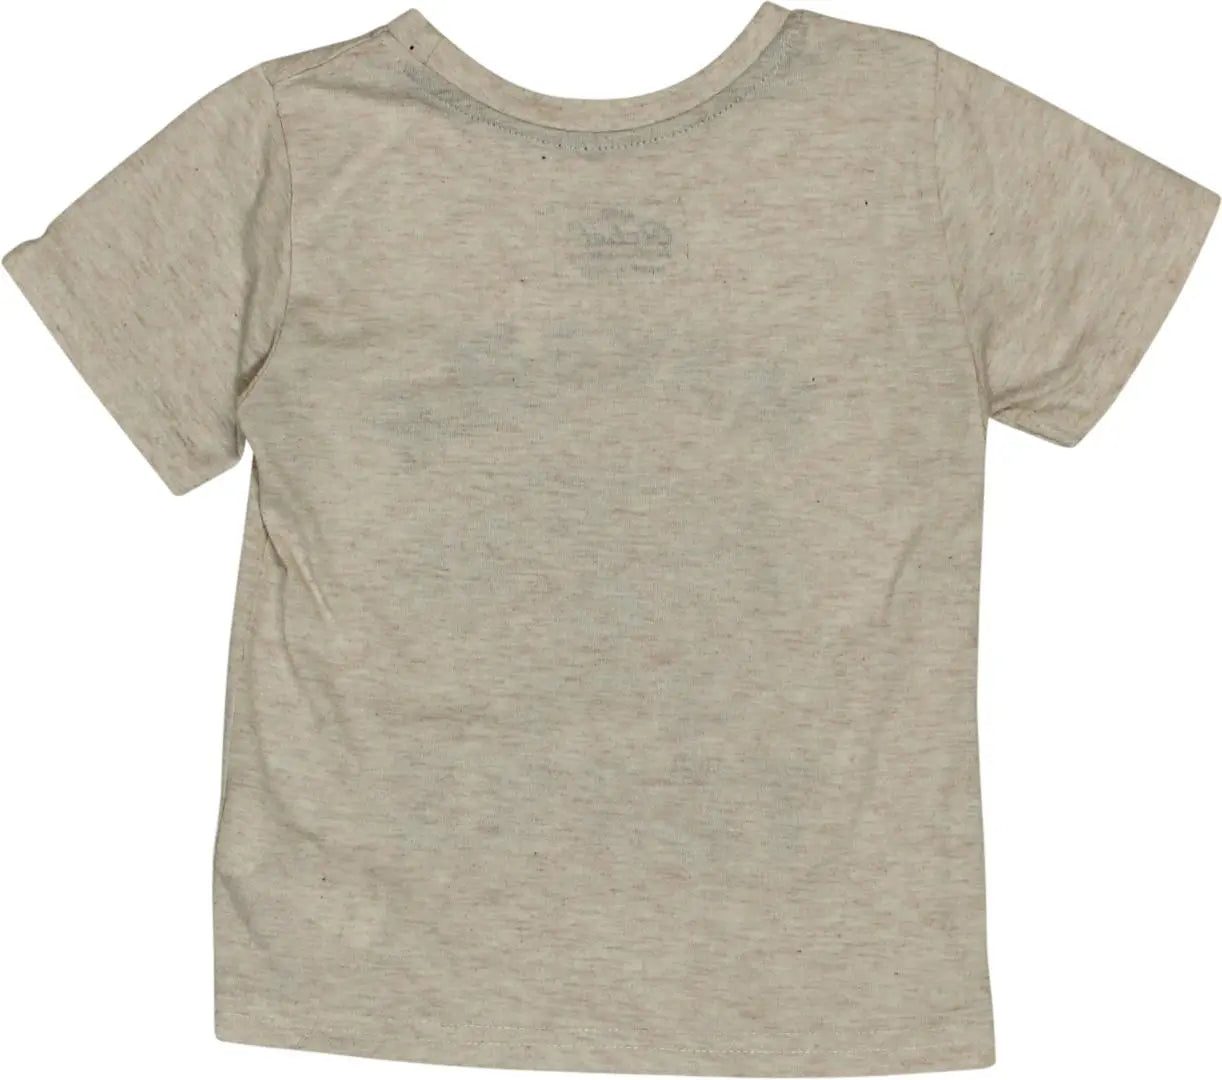 Primark - Beige T-shirt- ThriftTale.com - Vintage and second handclothing